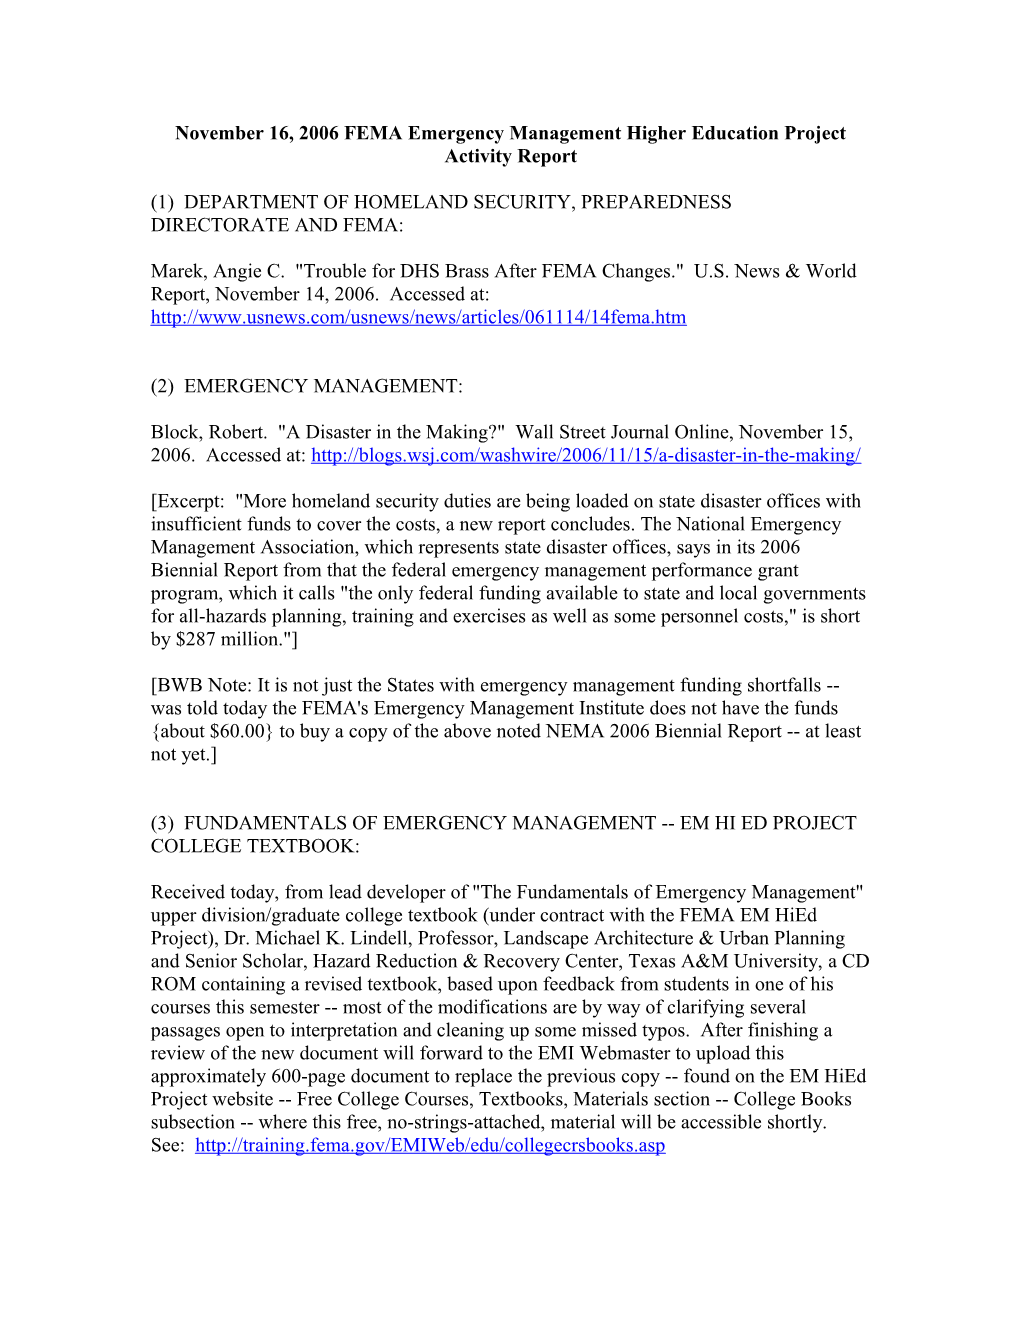 November 16, 2006 FEMA Emergency Management Higher Education Project Activity Report